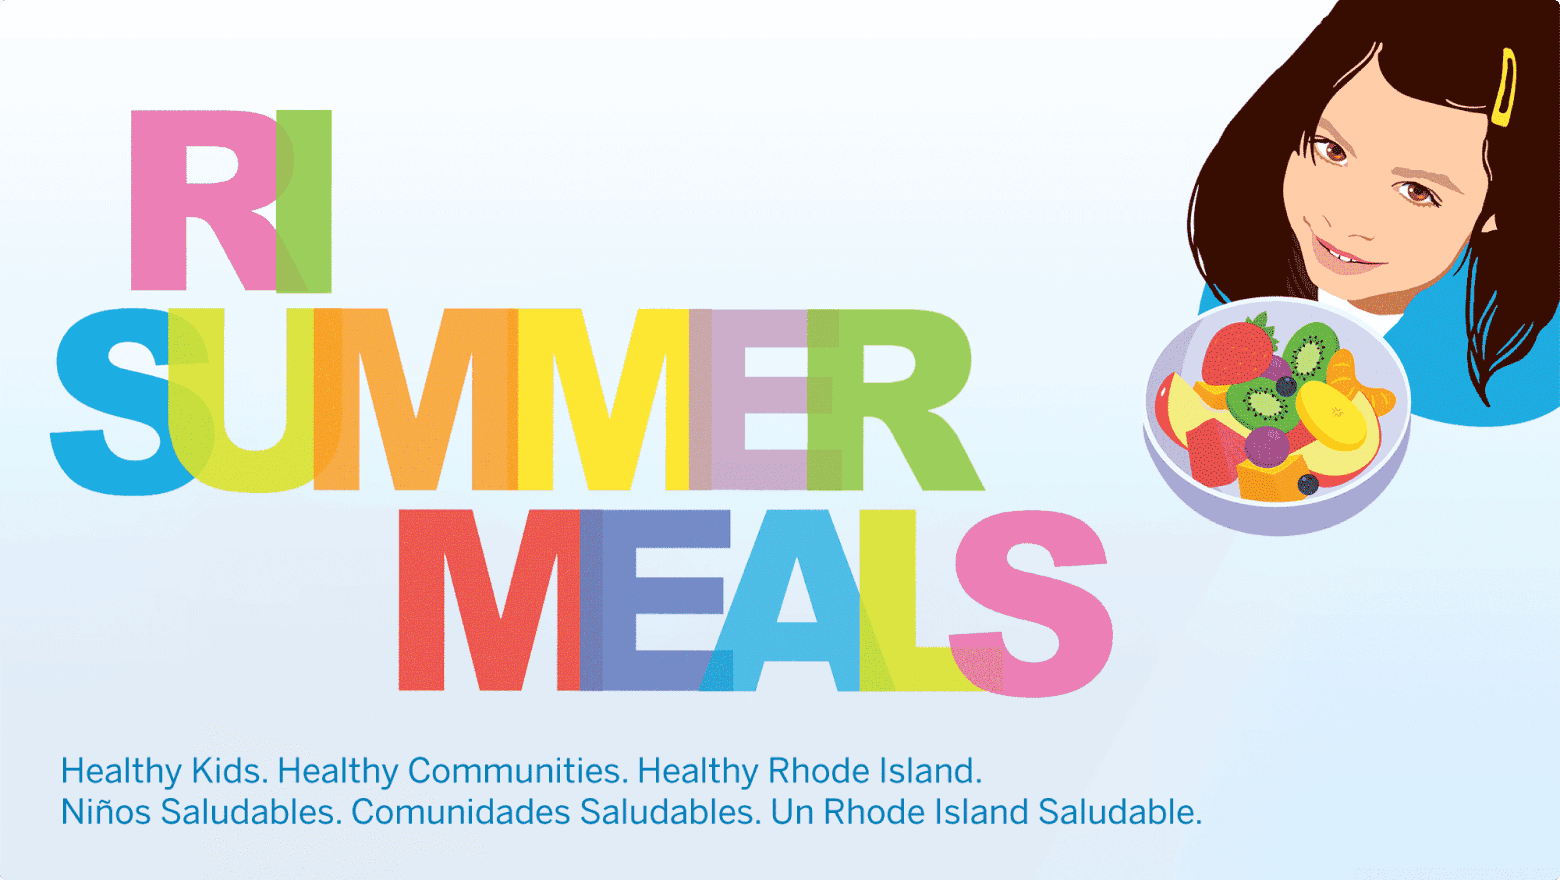 RI Summer Meals - Healthy Kids. Healthy Communities. Healthy Rhode Island.